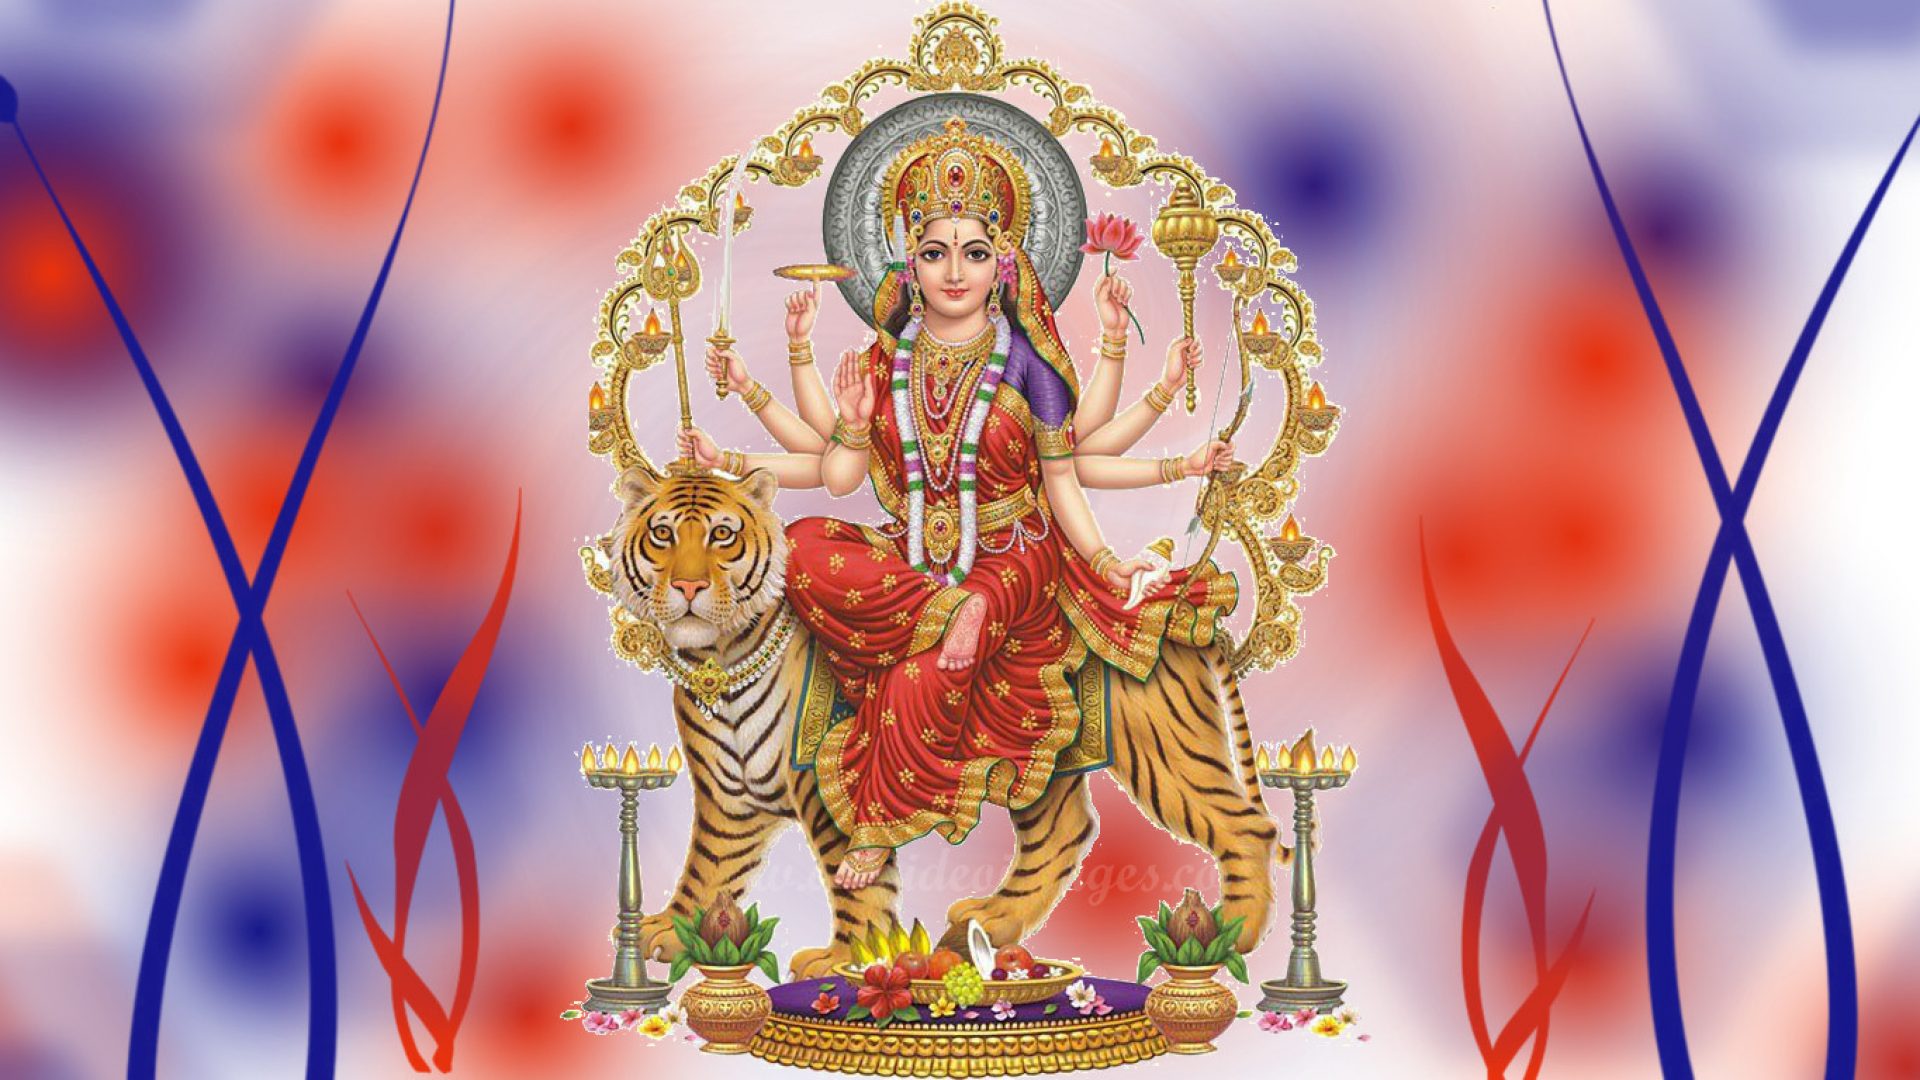 Maa Durga Wallpaper 3d Goddess Maa Durga